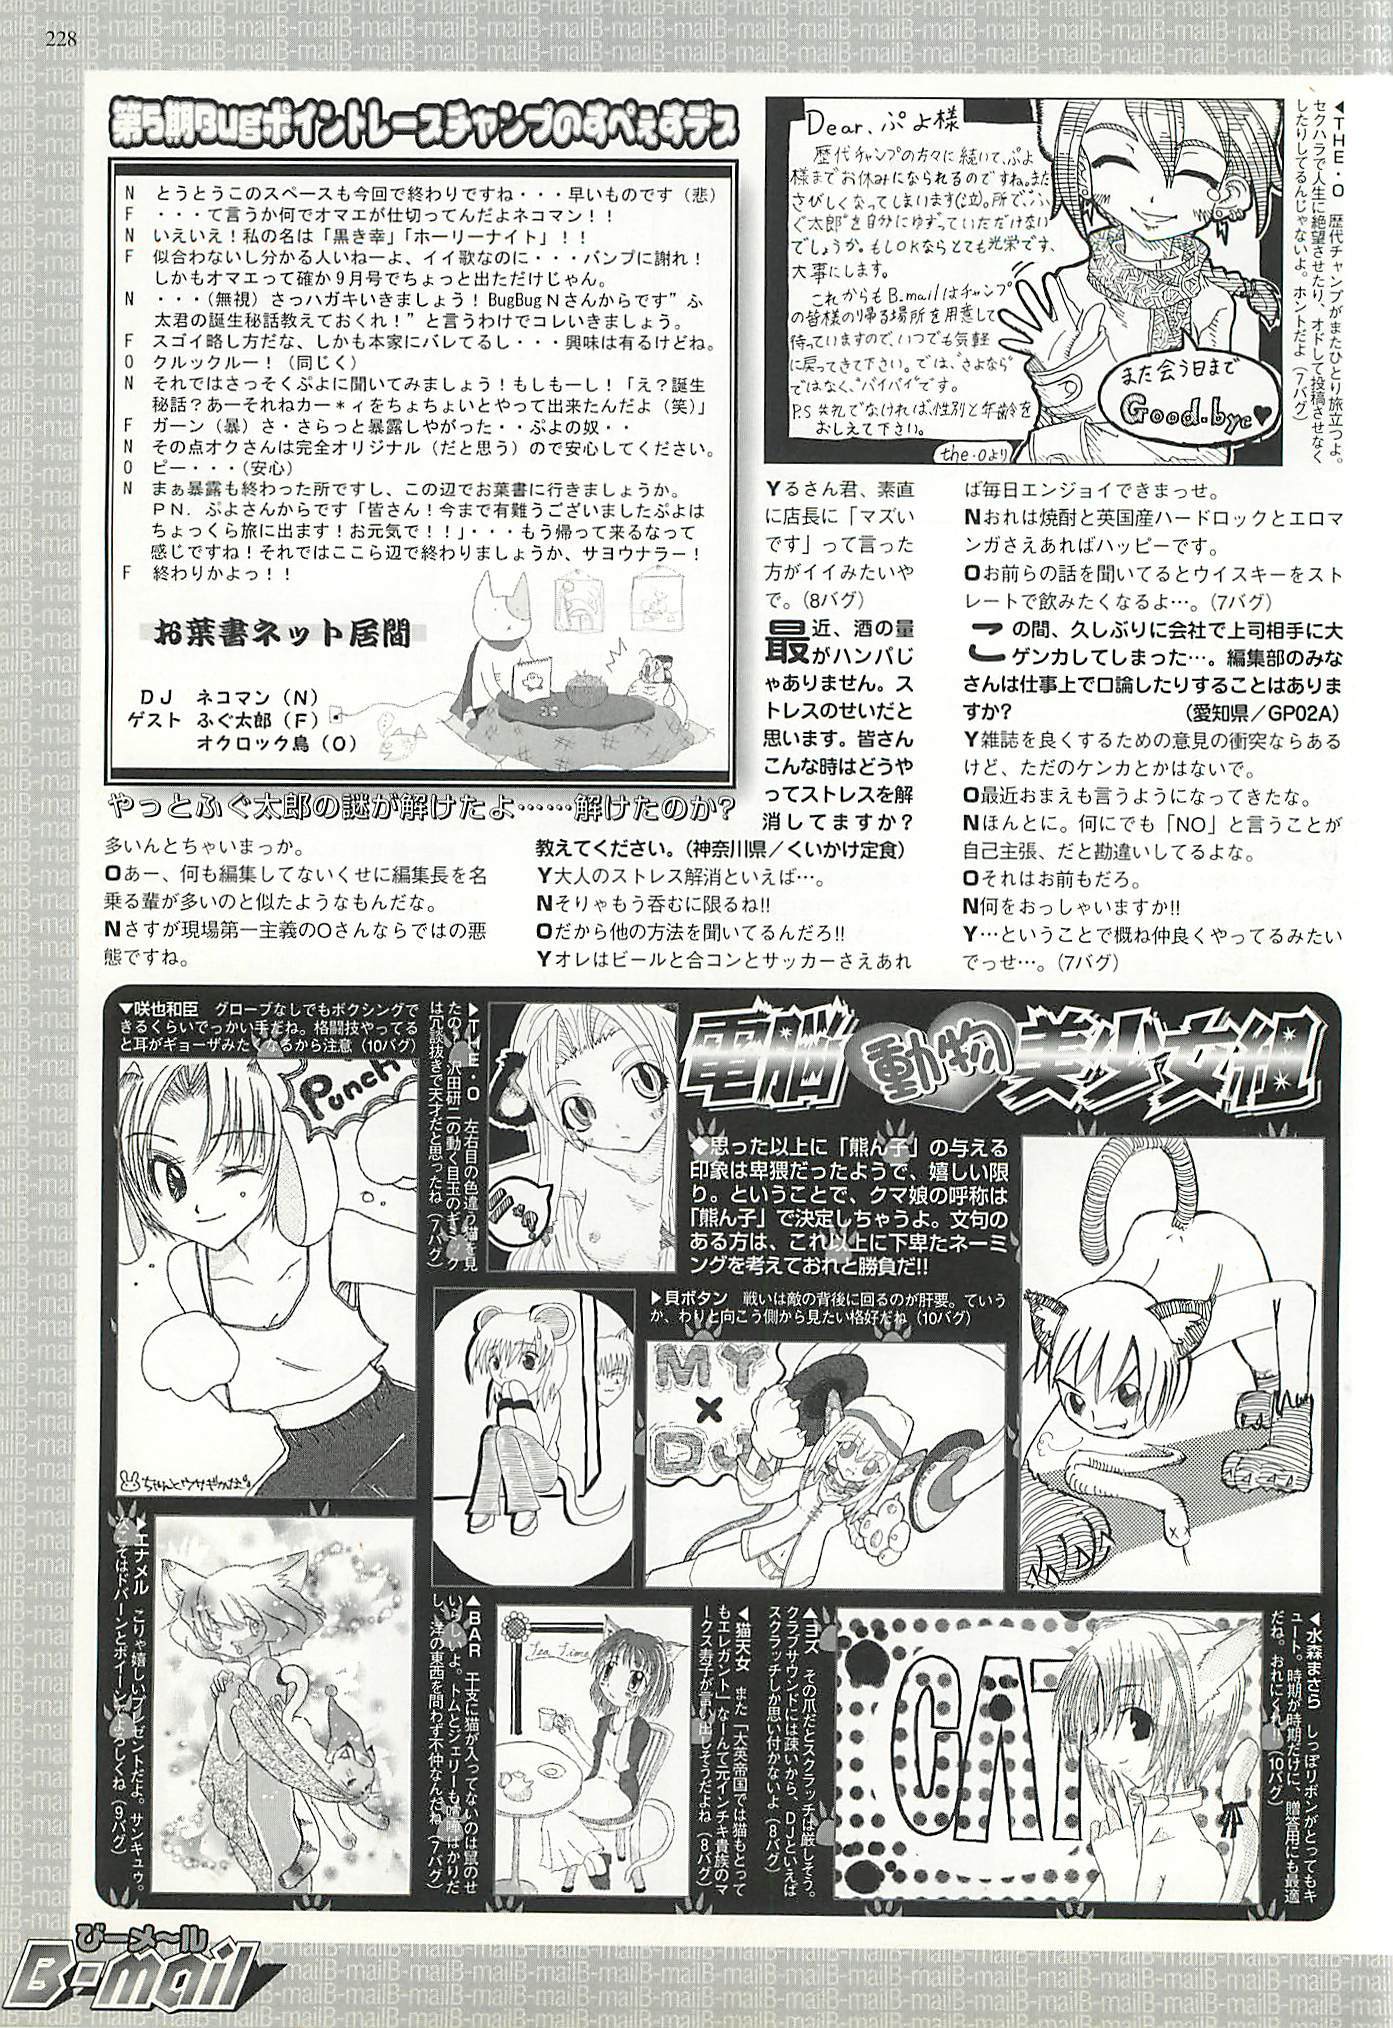 BugBug Magazine 2002-01 Vol 89